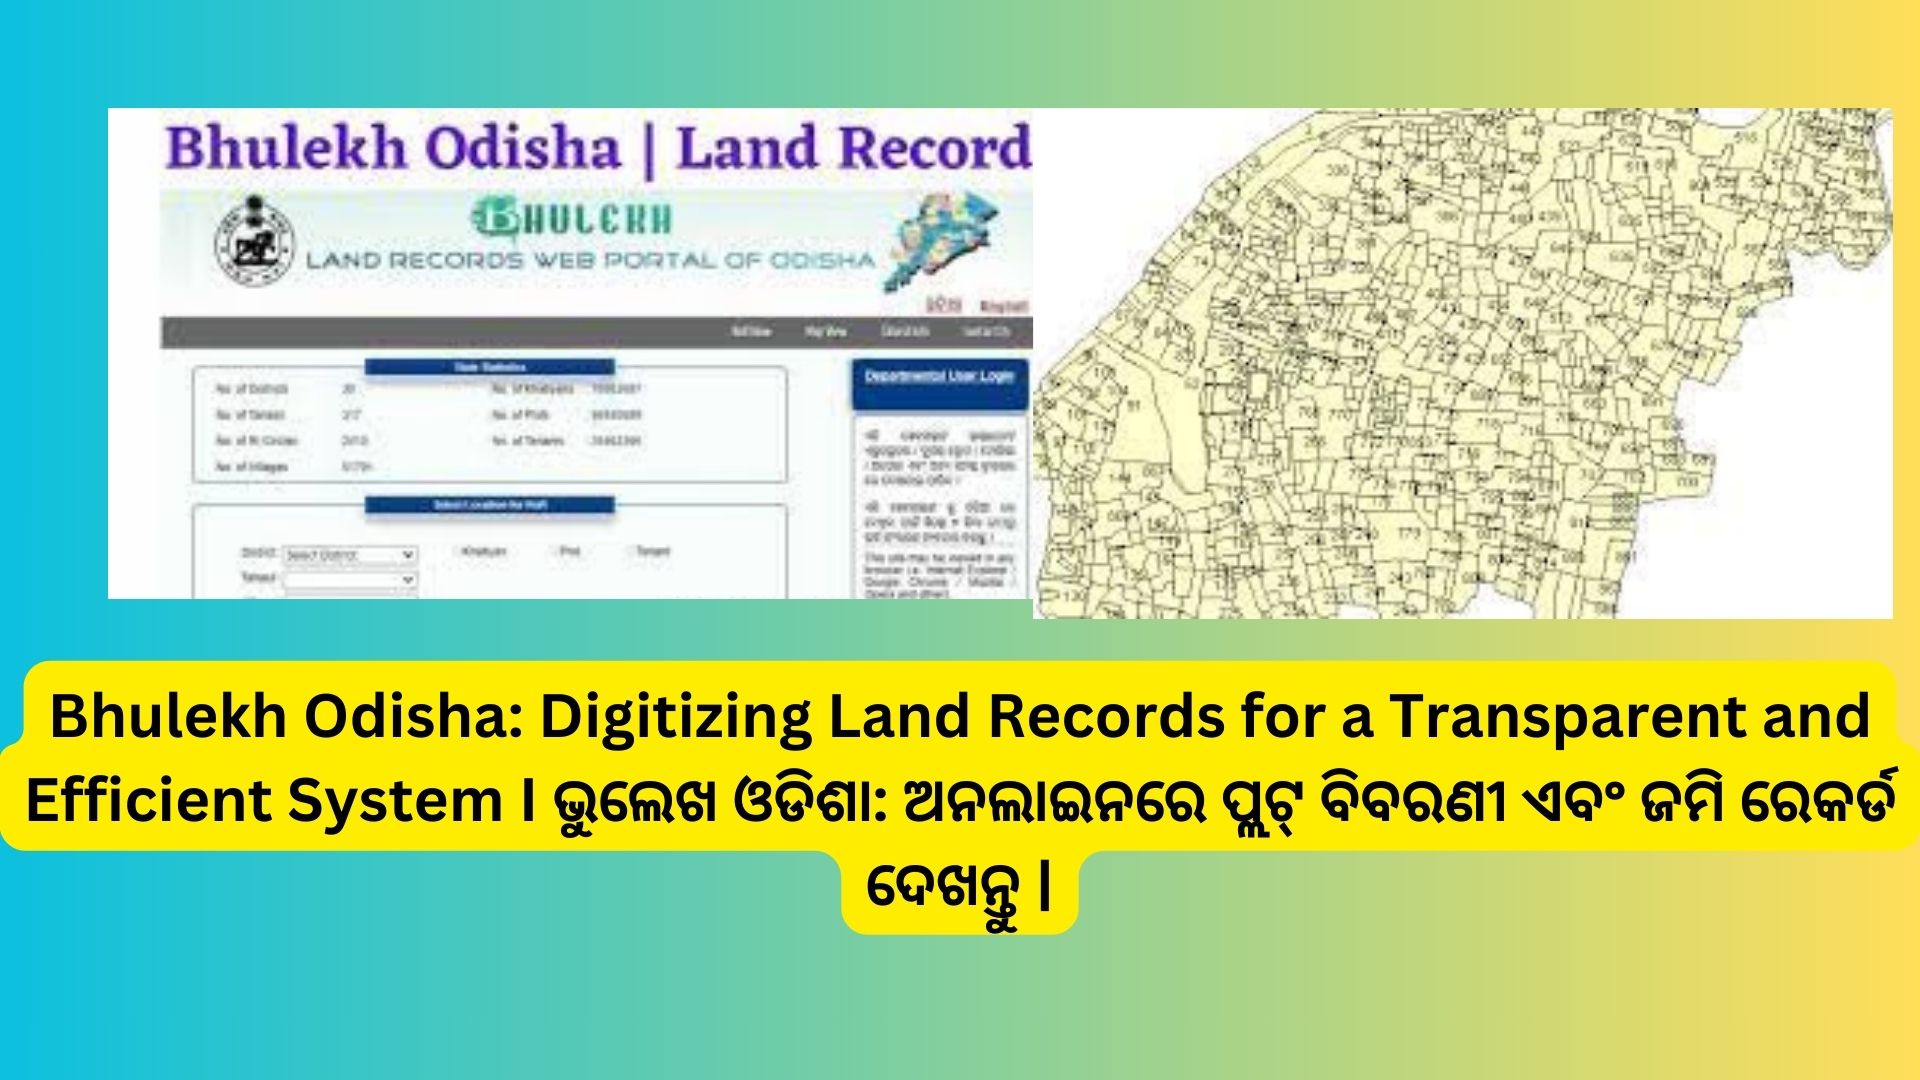 Bhulekh Odisha: Digitizing Land Records for a Transparent and Efficient System I ଭୁଲେଖ ଓଡିଶା: ଅନଲାଇନରେ ପ୍ଲଟ୍ ବିବରଣୀ ଏବଂ ଜମି ରେକର୍ଡ ଦେଖନ୍ତୁ |